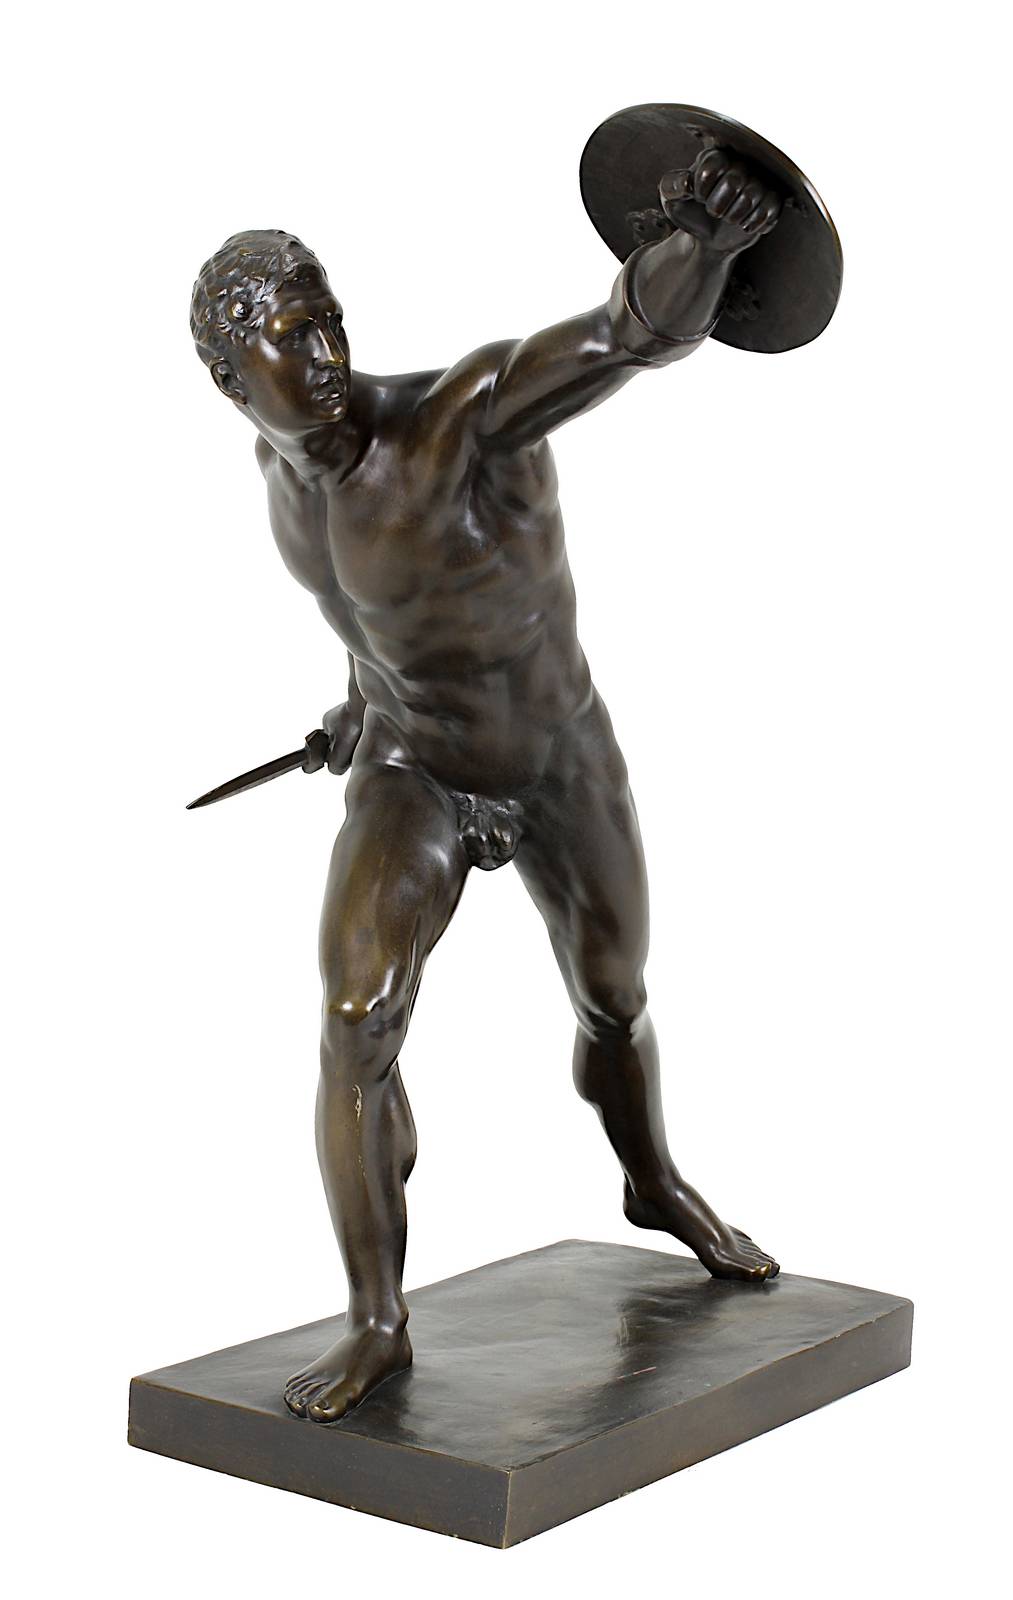 Borghesischer Fechter bzw. Gladiator Borghese, Bronzefigur, Anfang 20. Jh., nach der antiken heute